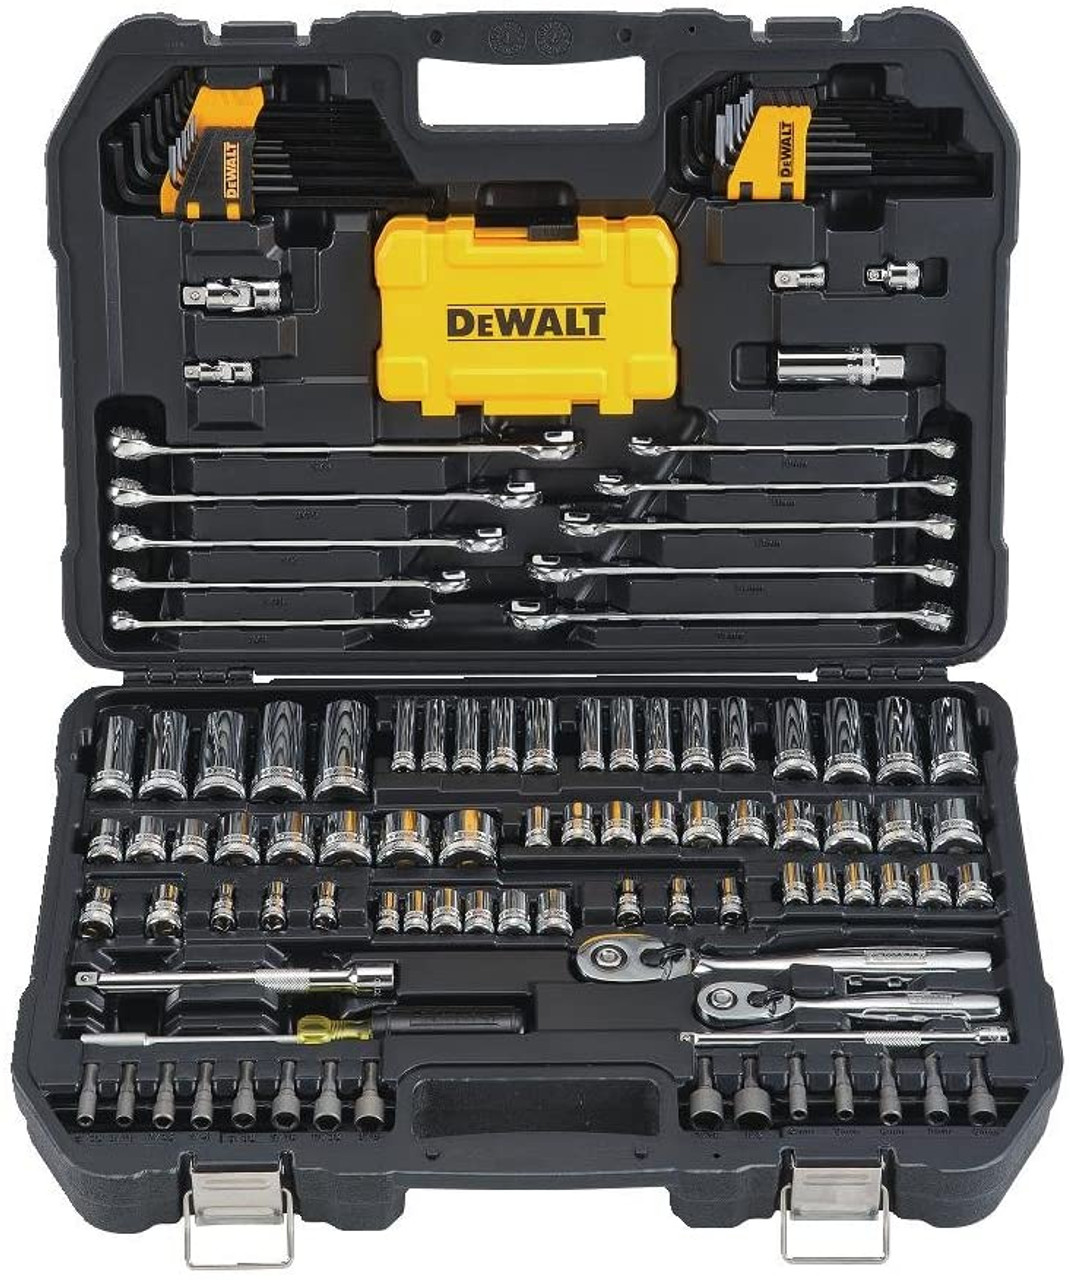 Dewalt Mechanics Tools Kit and Socket Set, 142 - piece